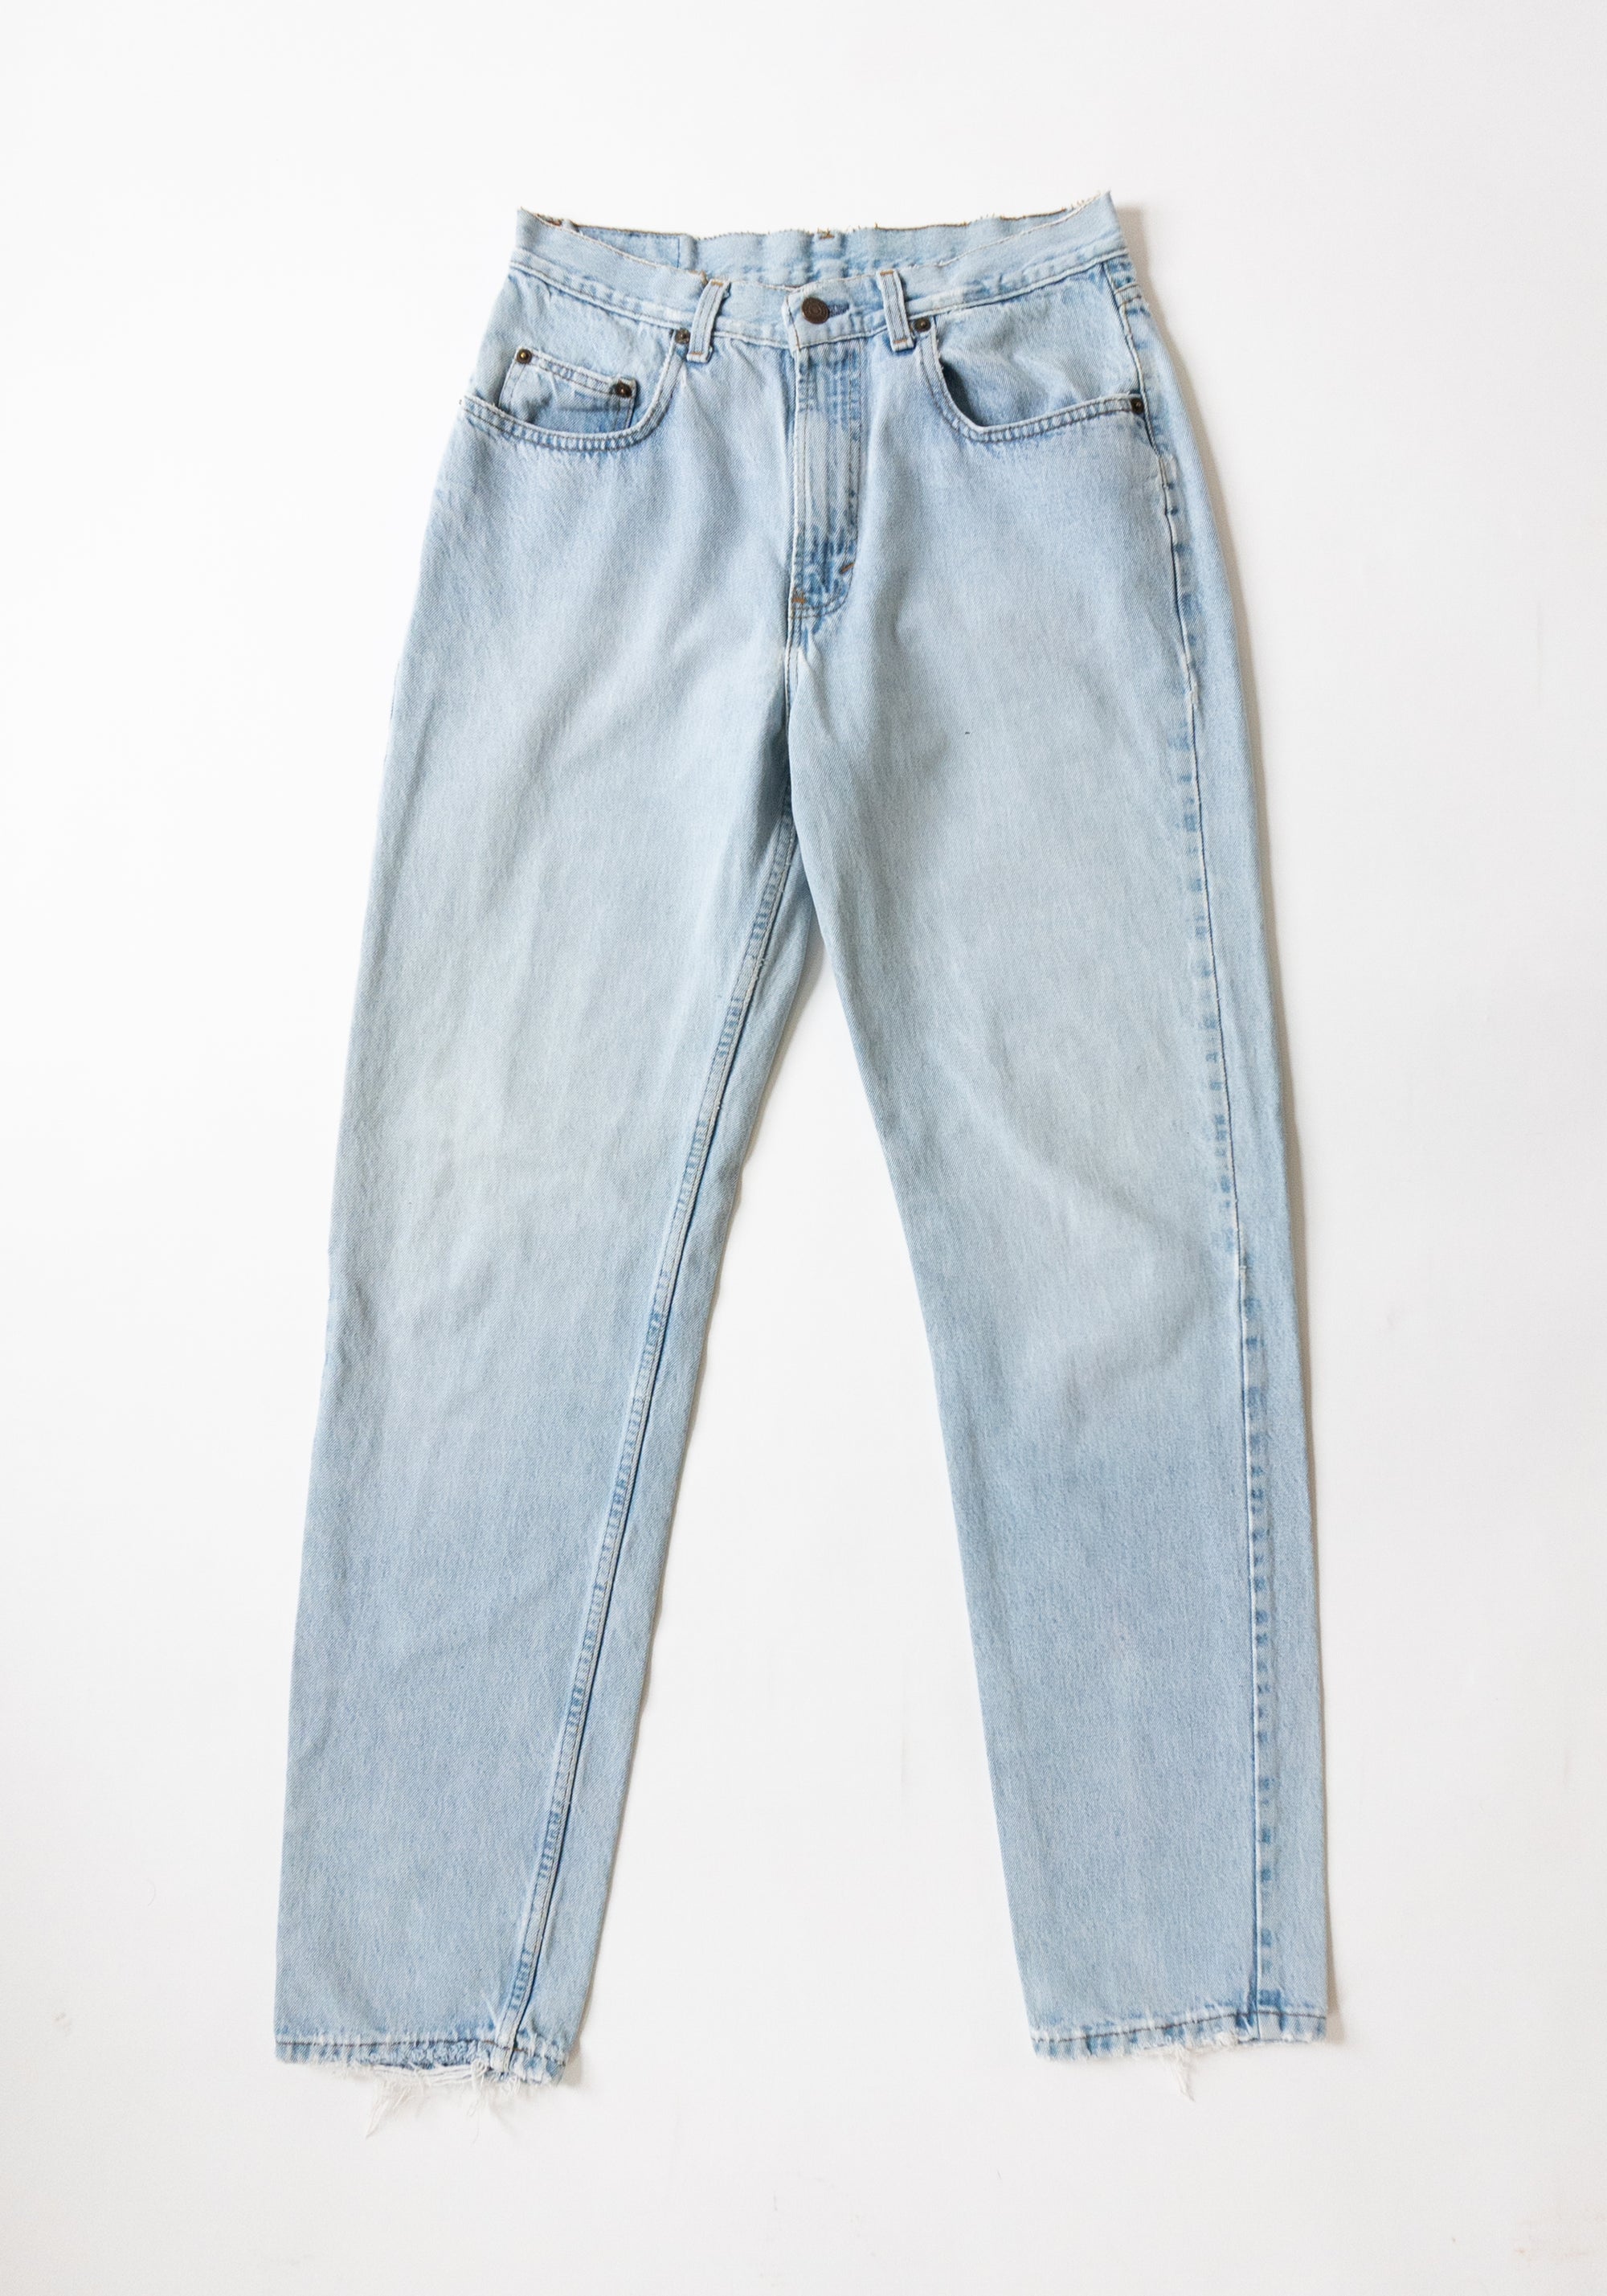 Vintage 90s Gap Jeans